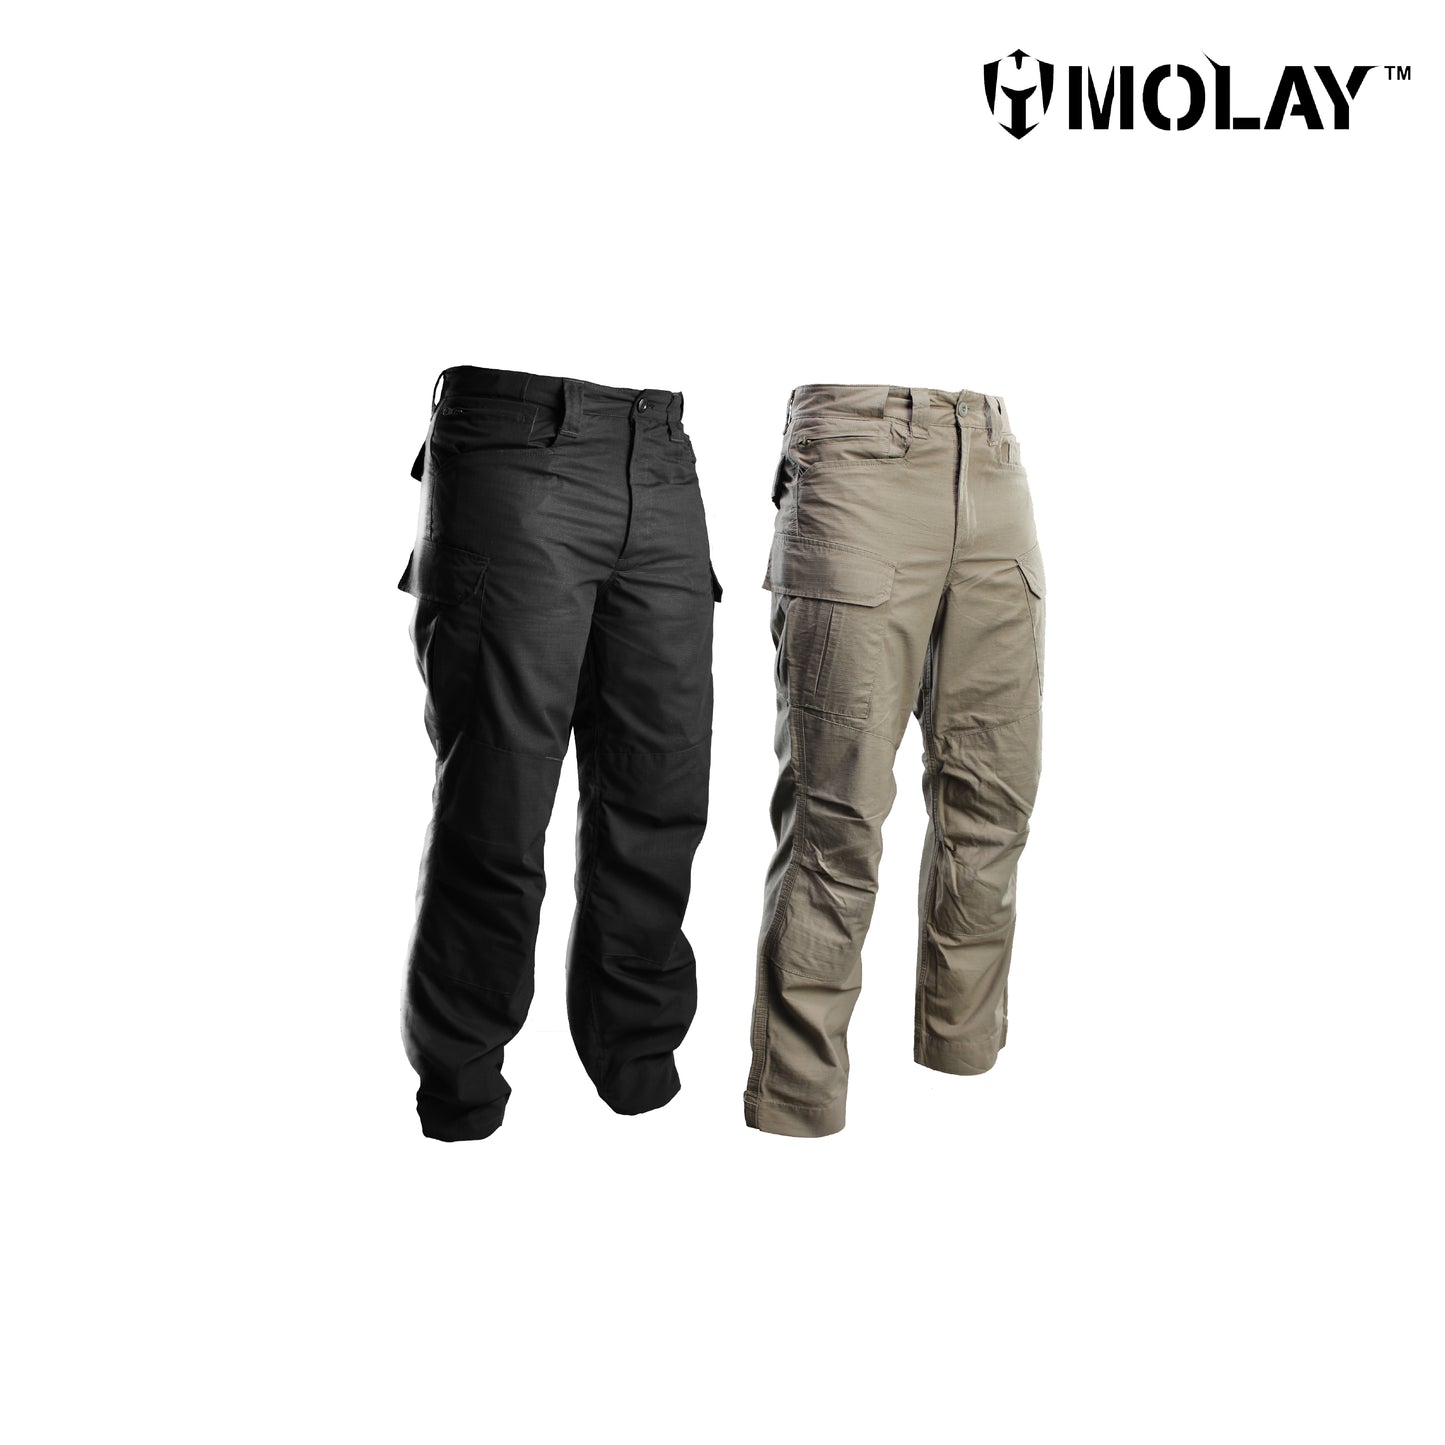 Molay® Peacekeeping Uniform Pant